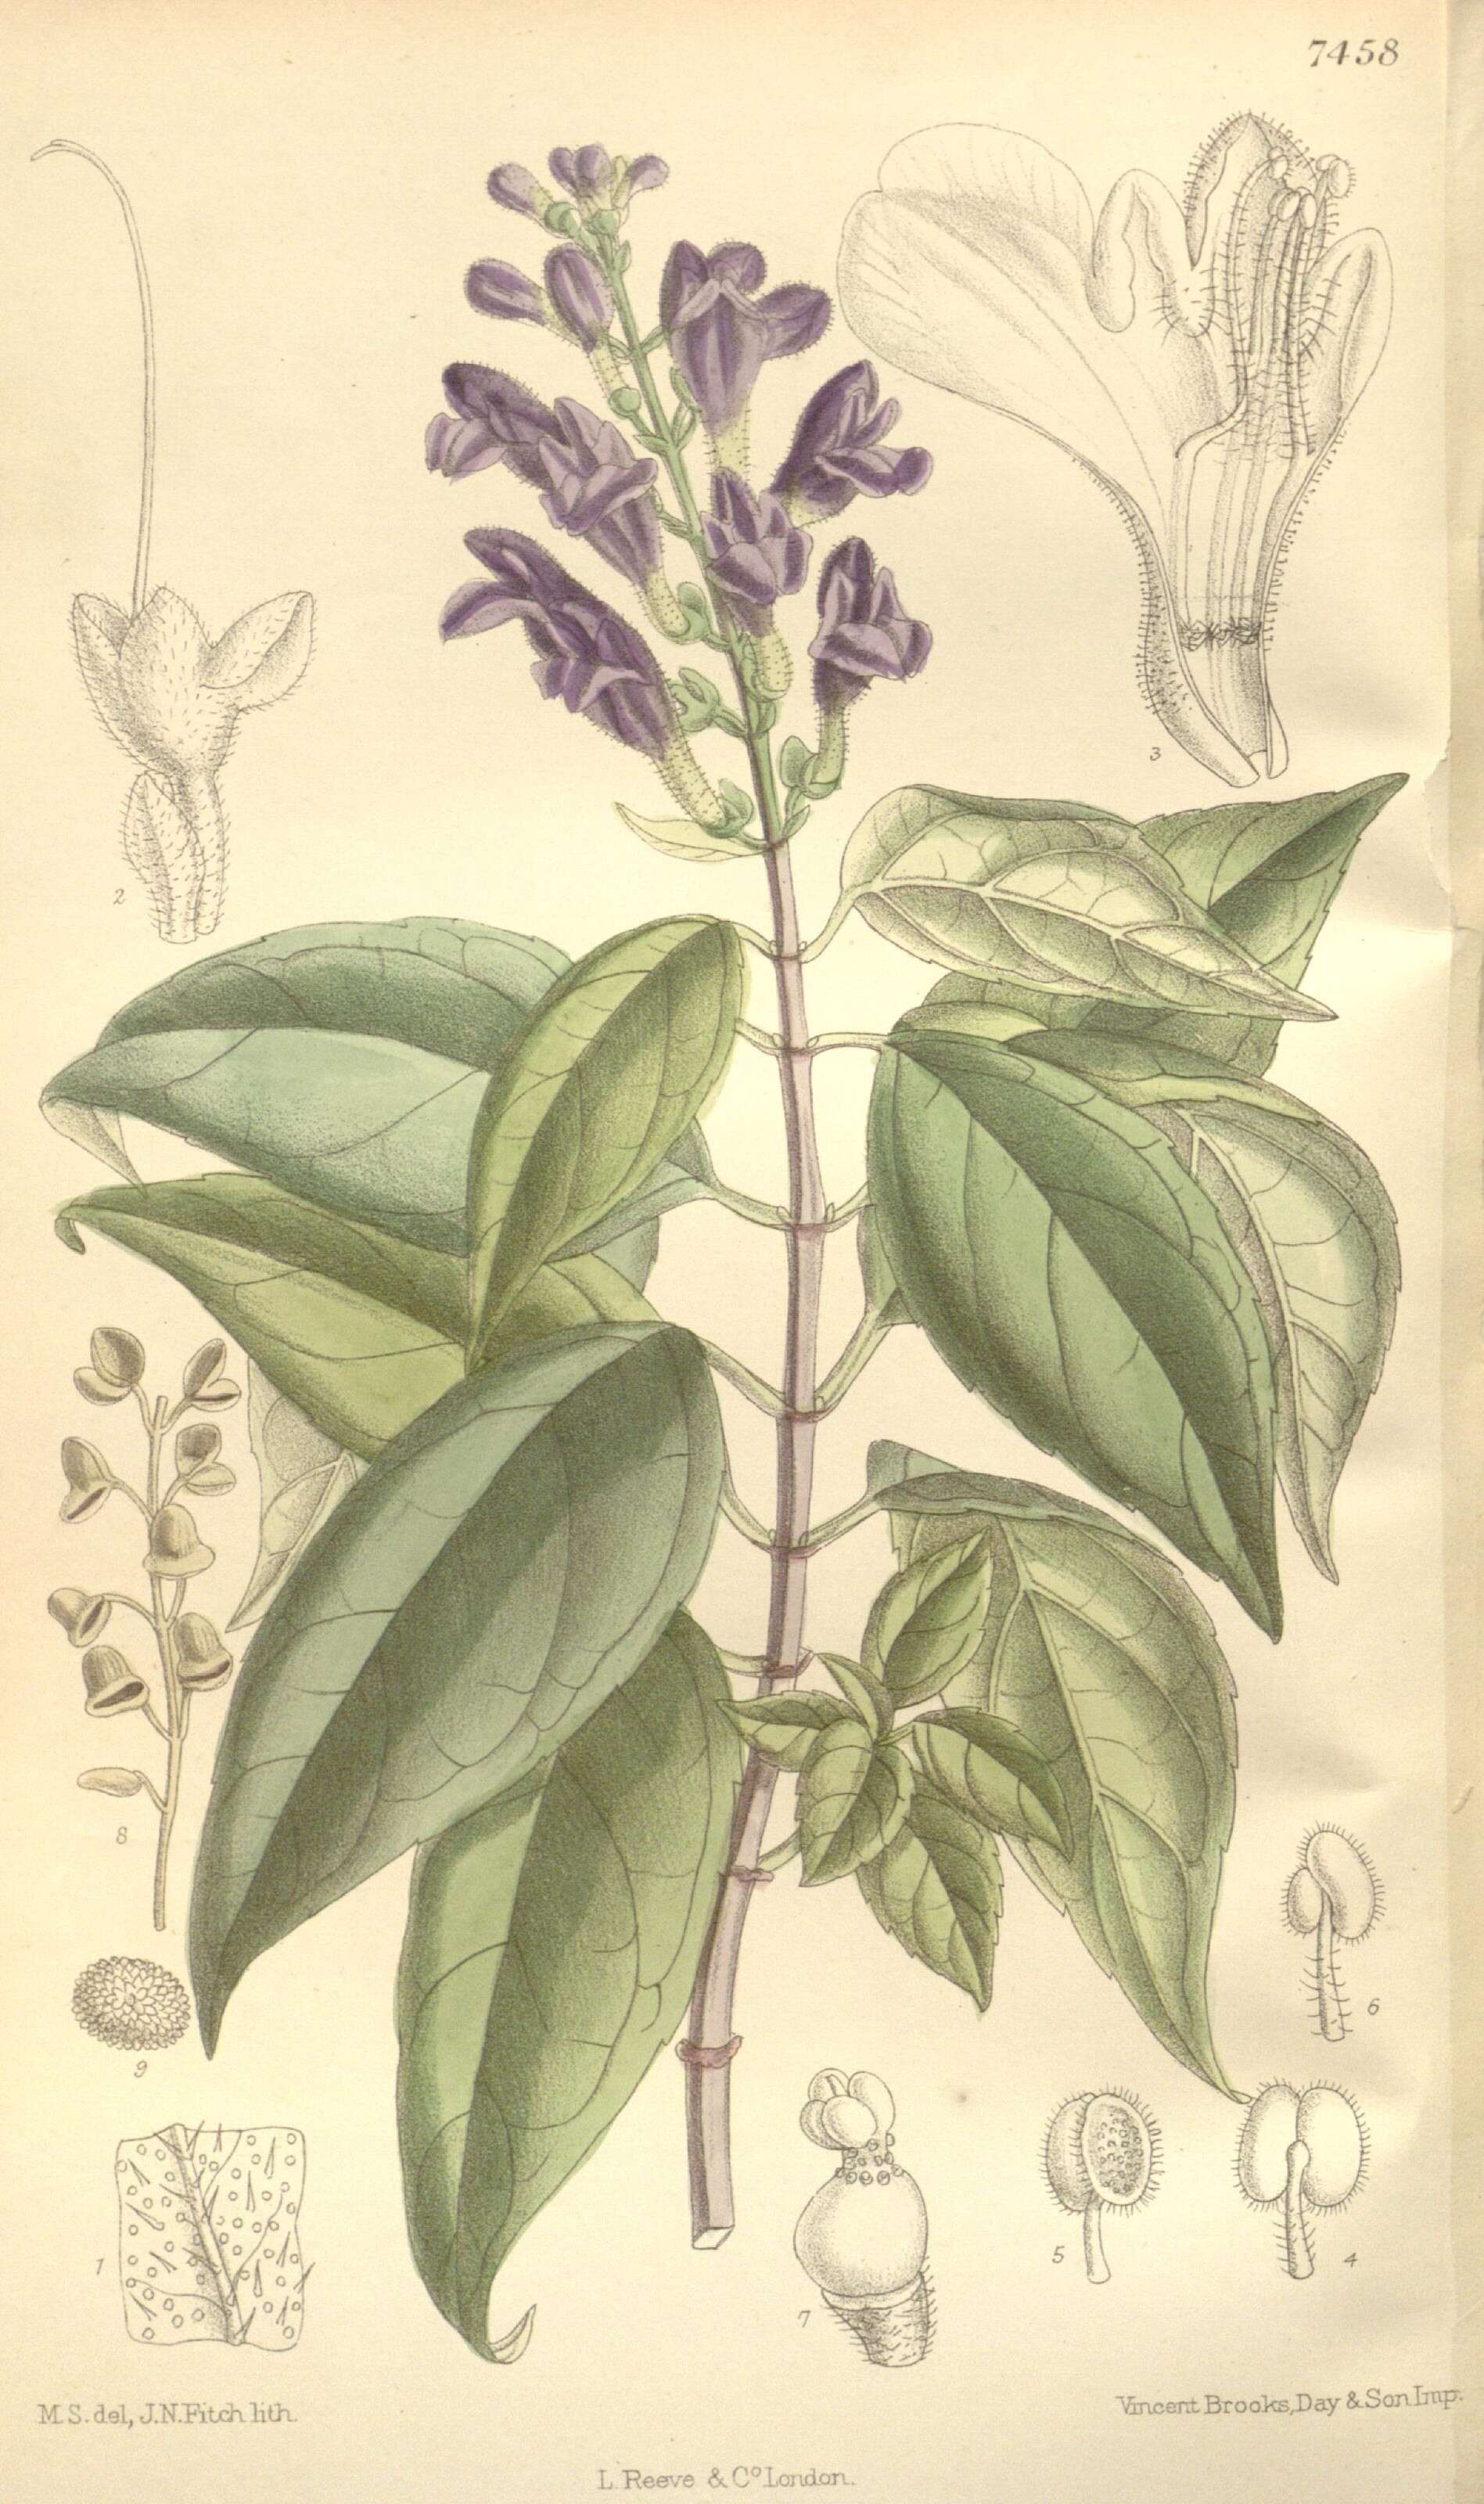 Sivun Scutellaria formosana N. E. Br. kuva